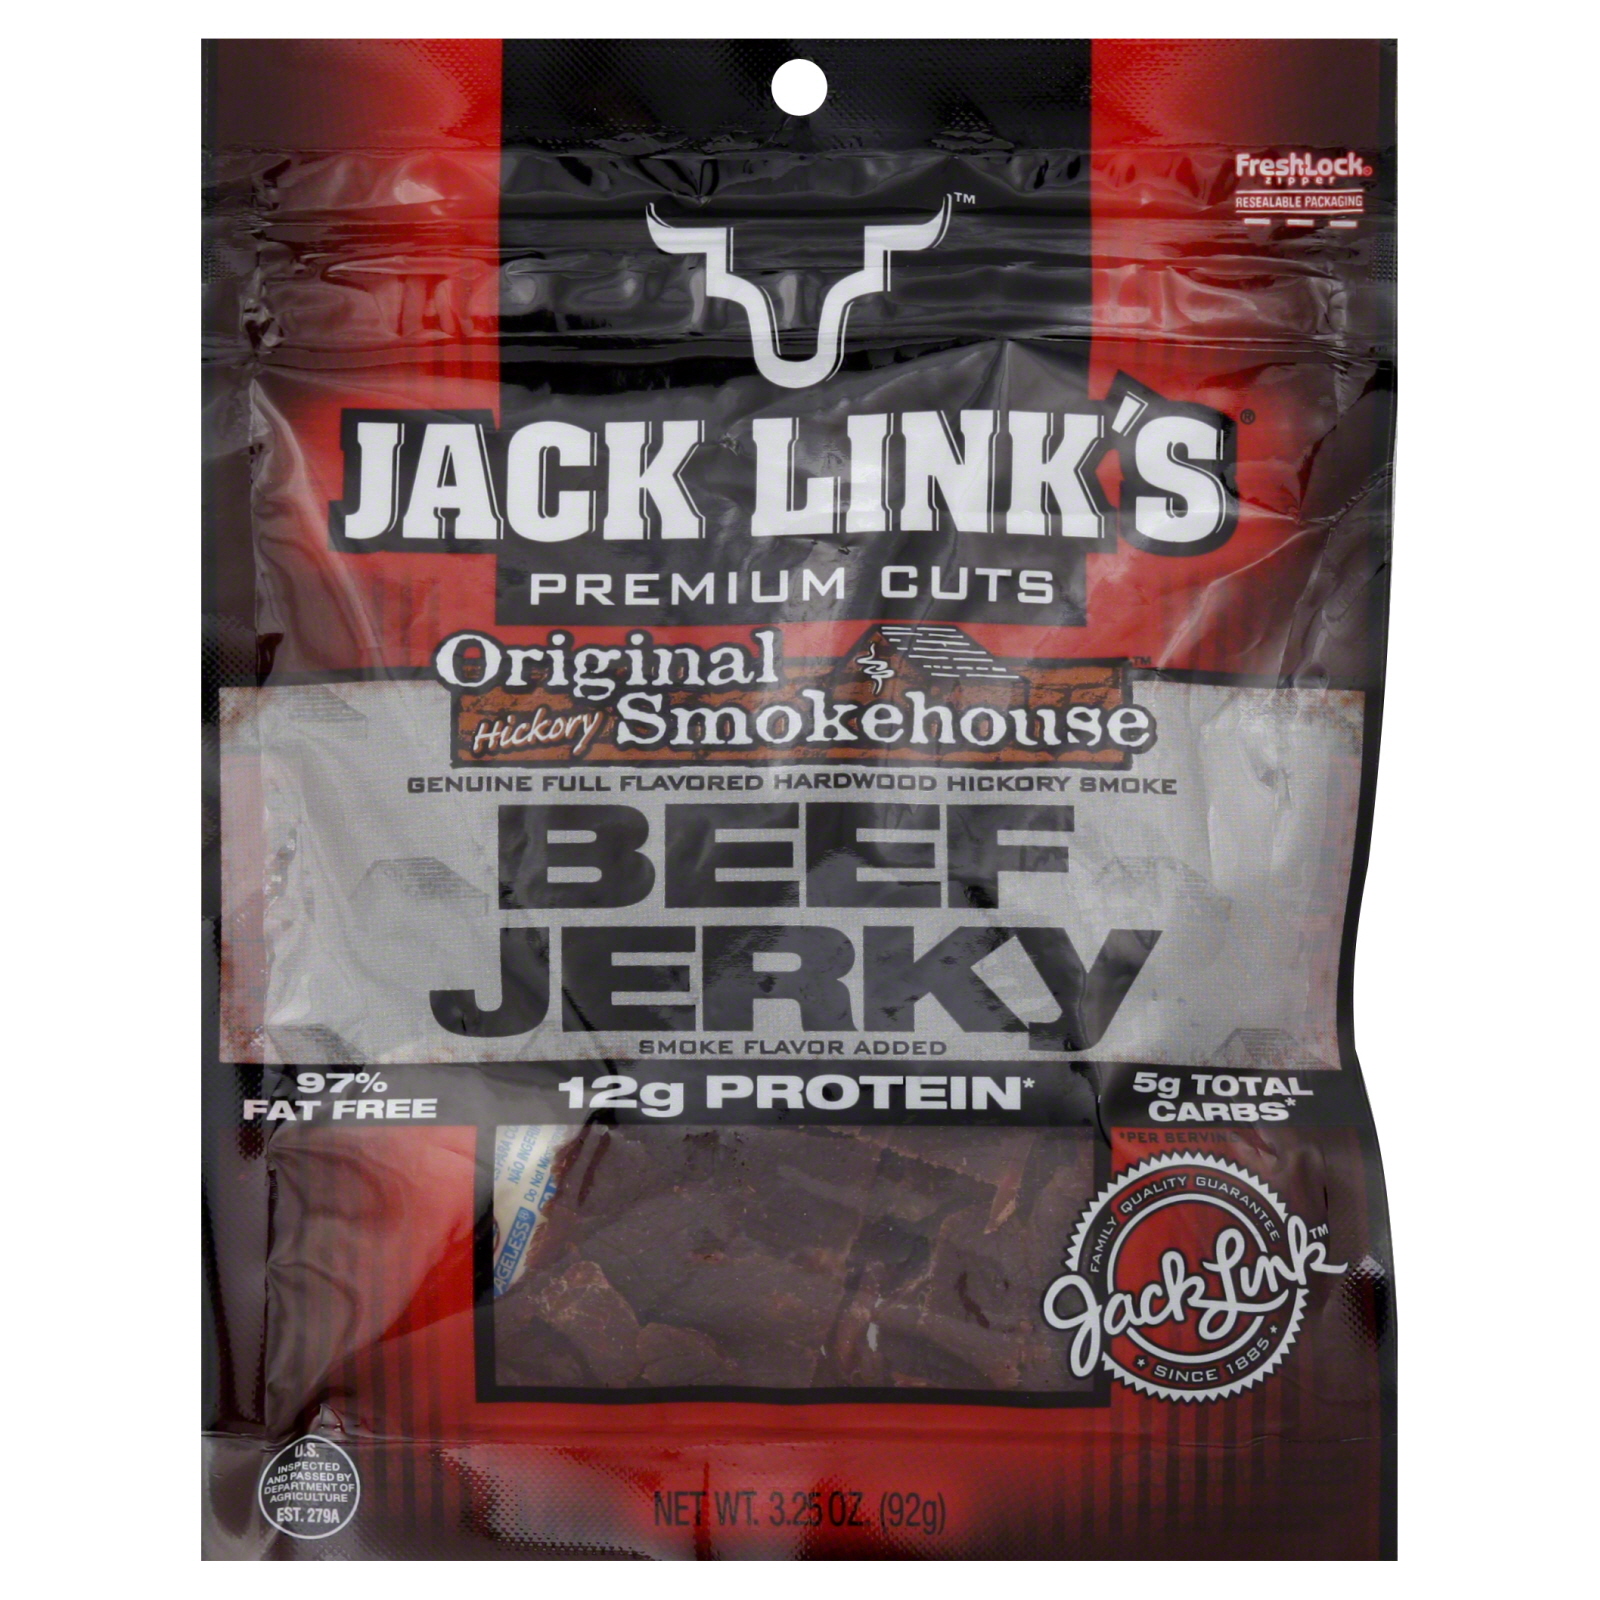 Jack Link's Original Smokehouse Jerky 3.25 Ounce